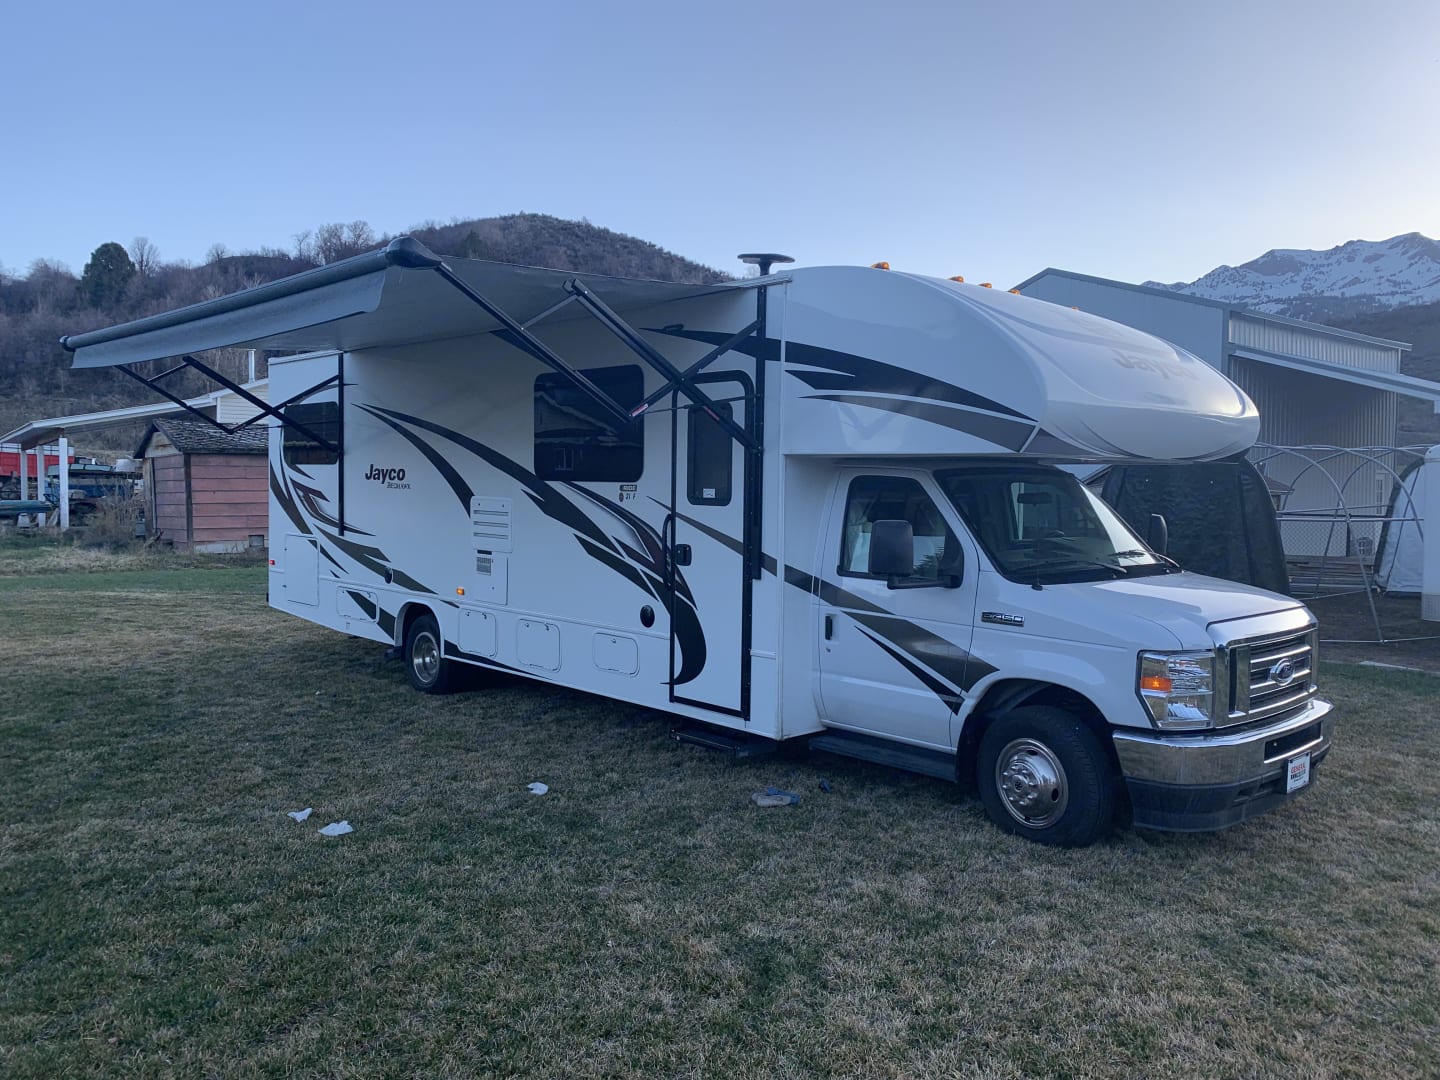 Pet friendly camper rental near Salt Lake City, UT